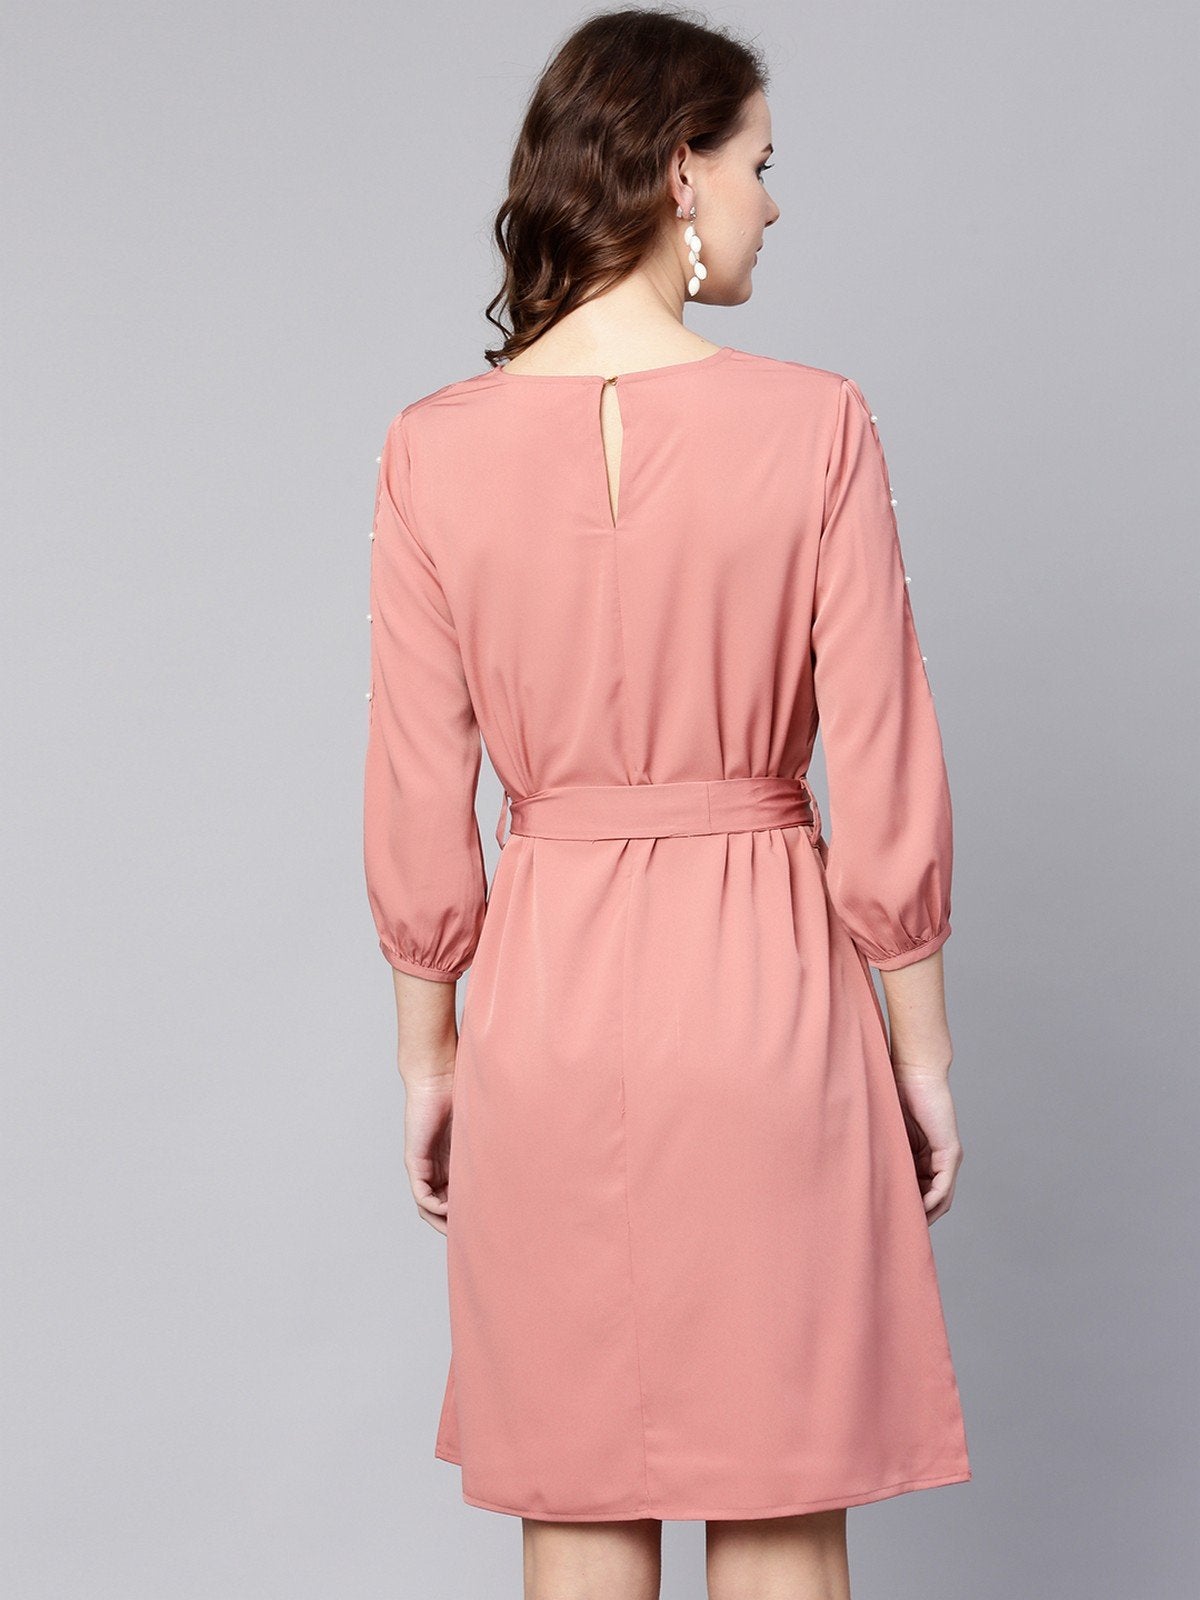 Women's Pearl Slit Sleeves A-Line Dress - Pannkh